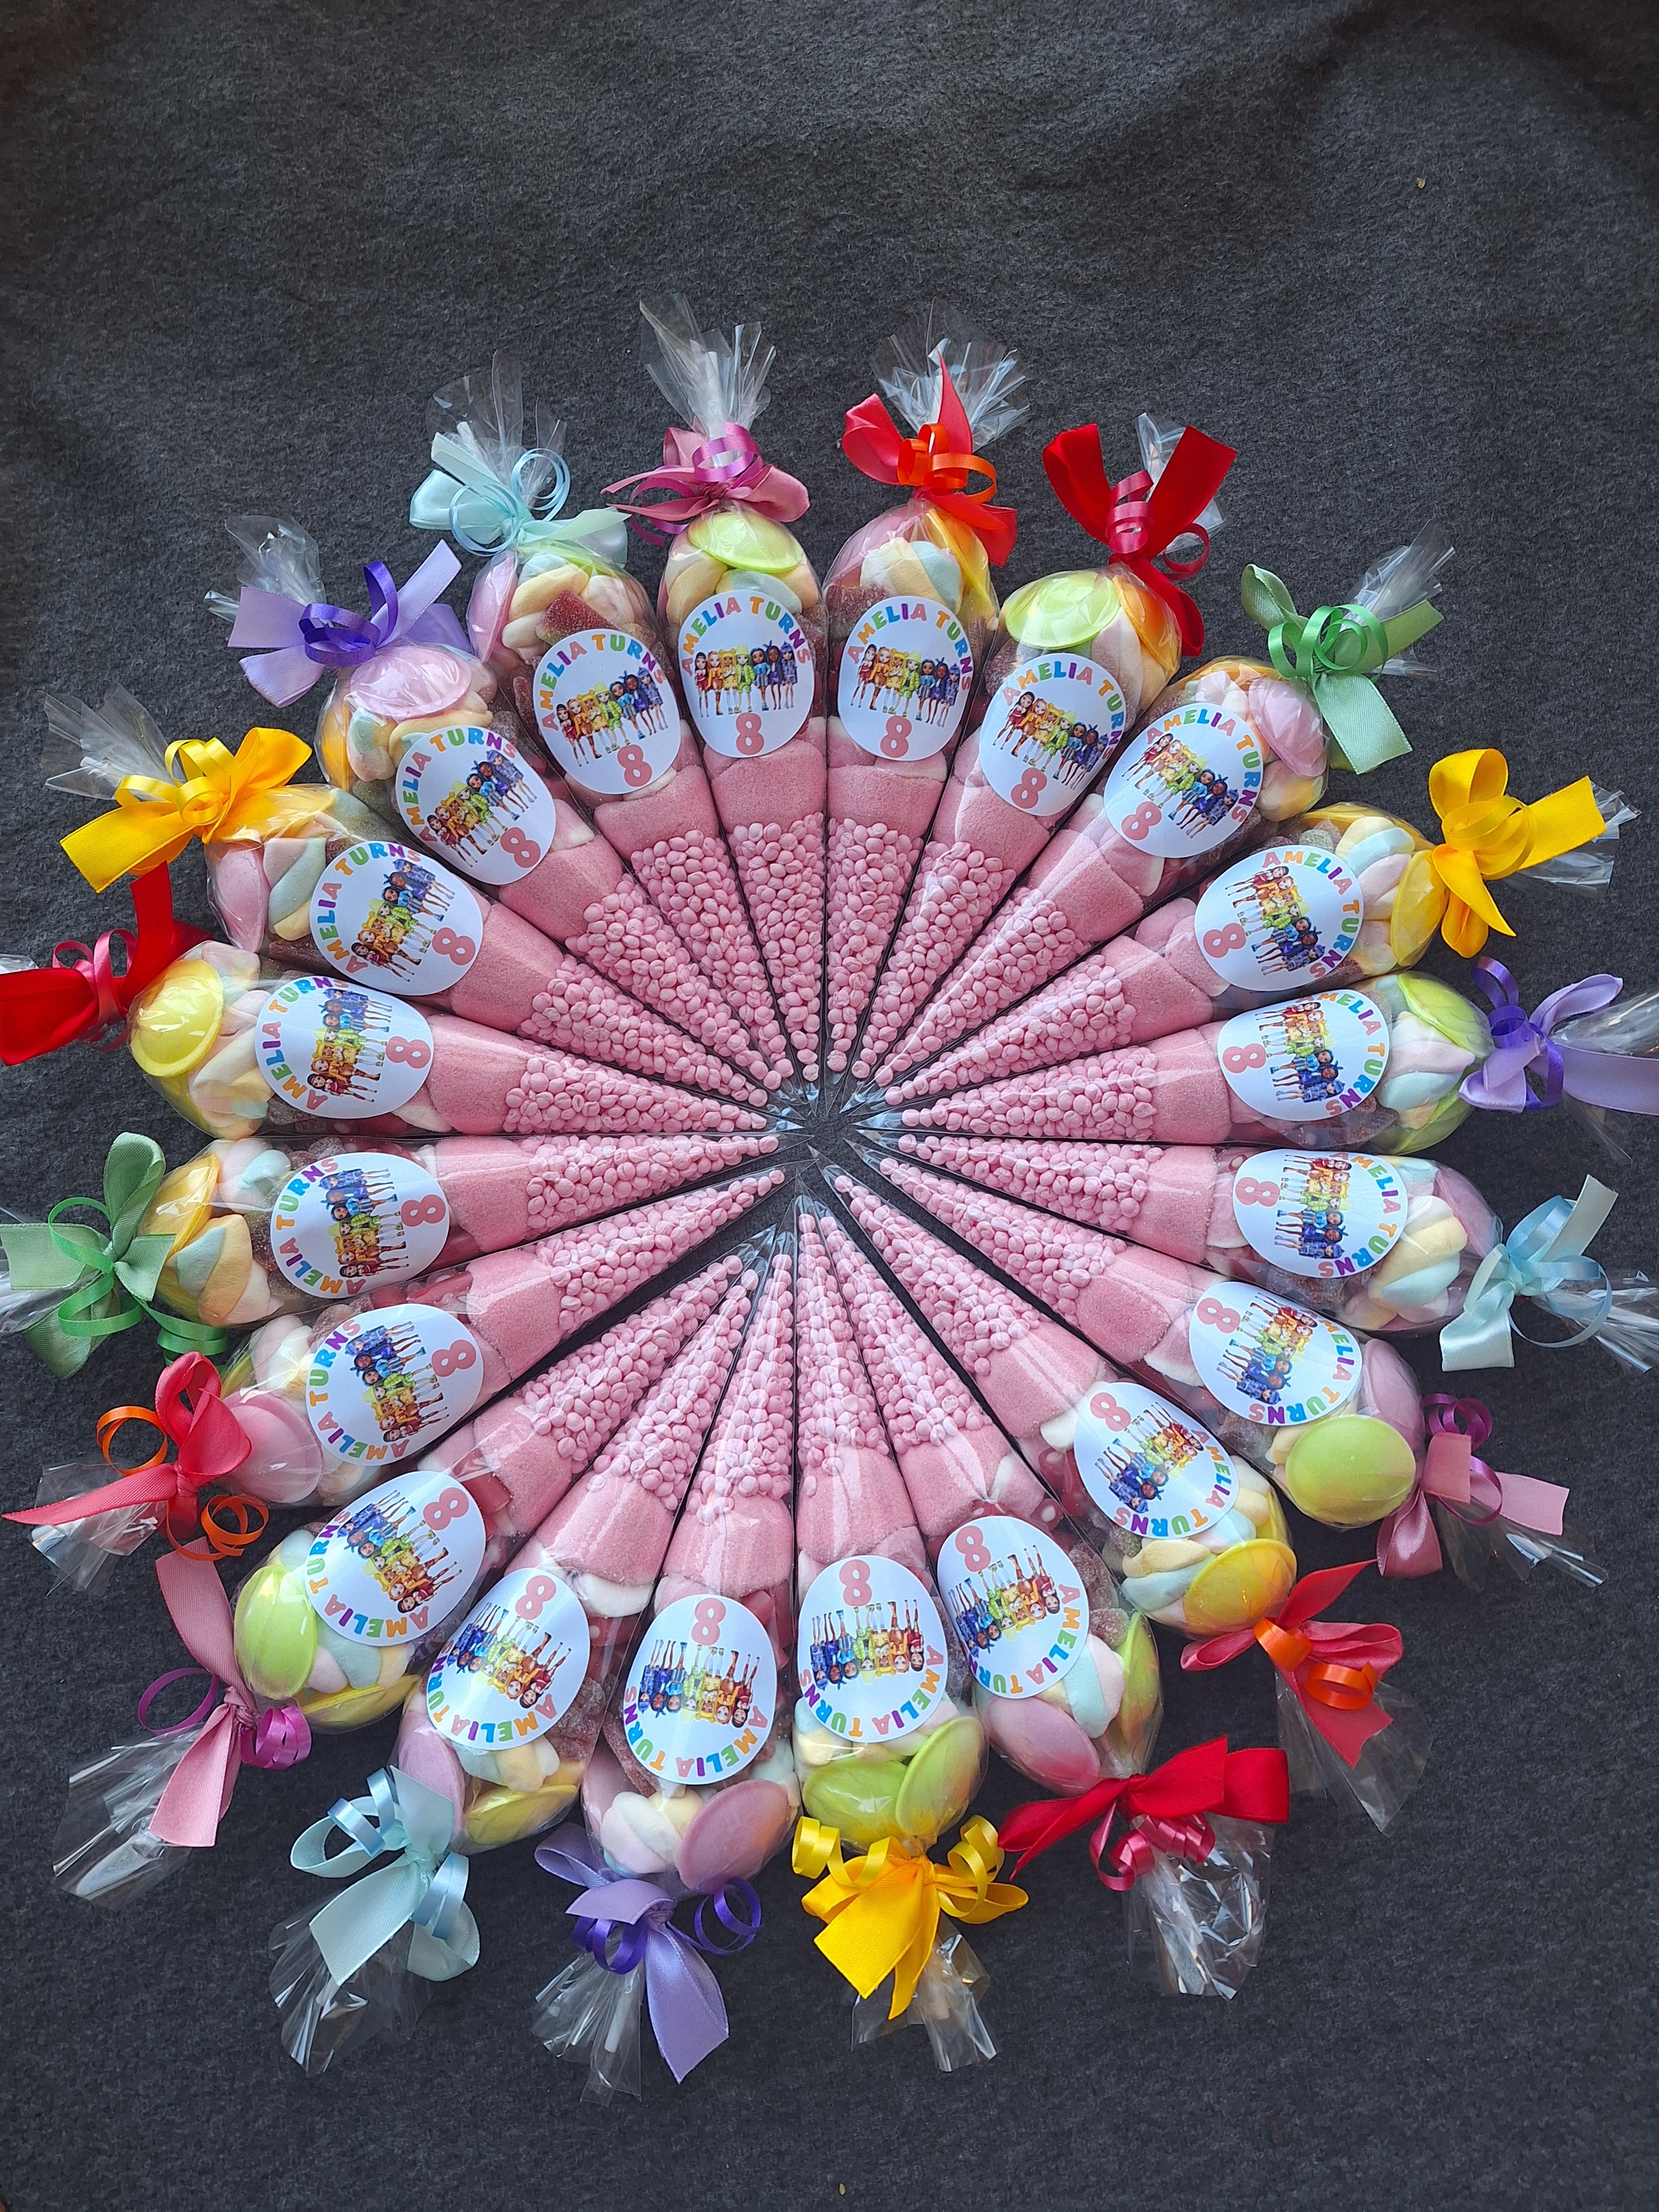 Rainbow High Doll themed sweet cones